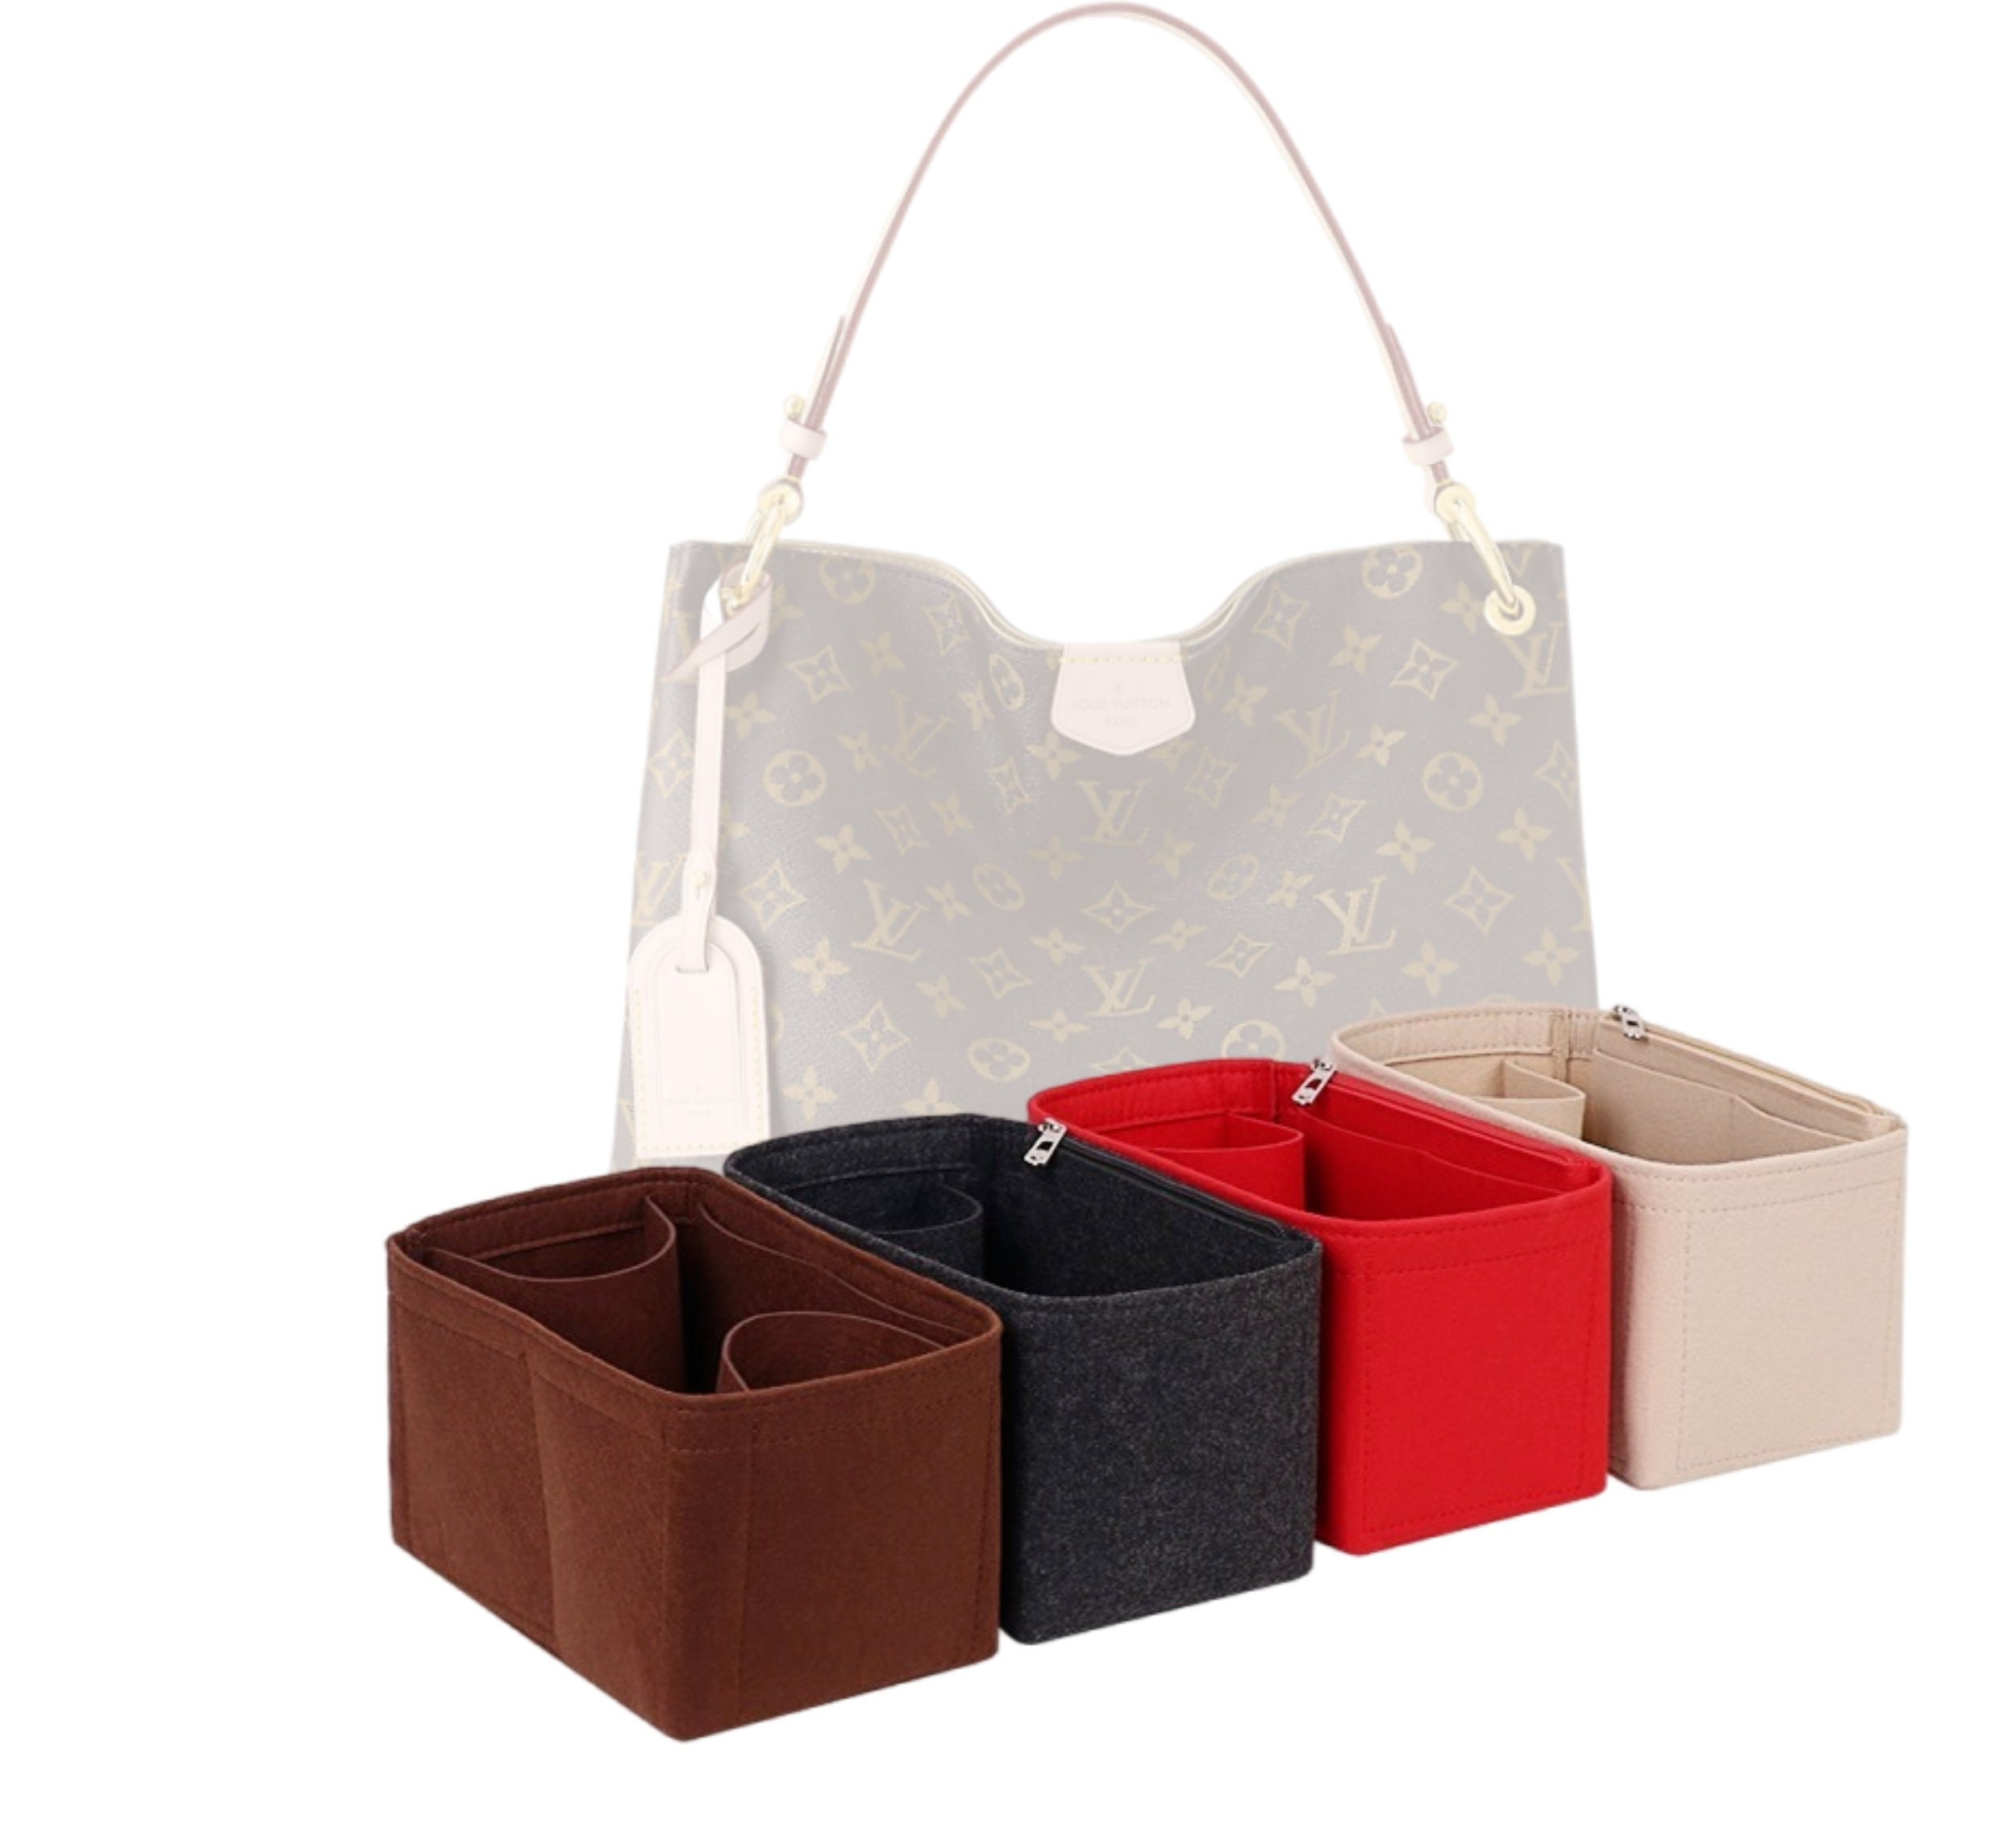 Graceful MM ❤️  Lv handbags, Bags, Louis vuitton handbags neverfull